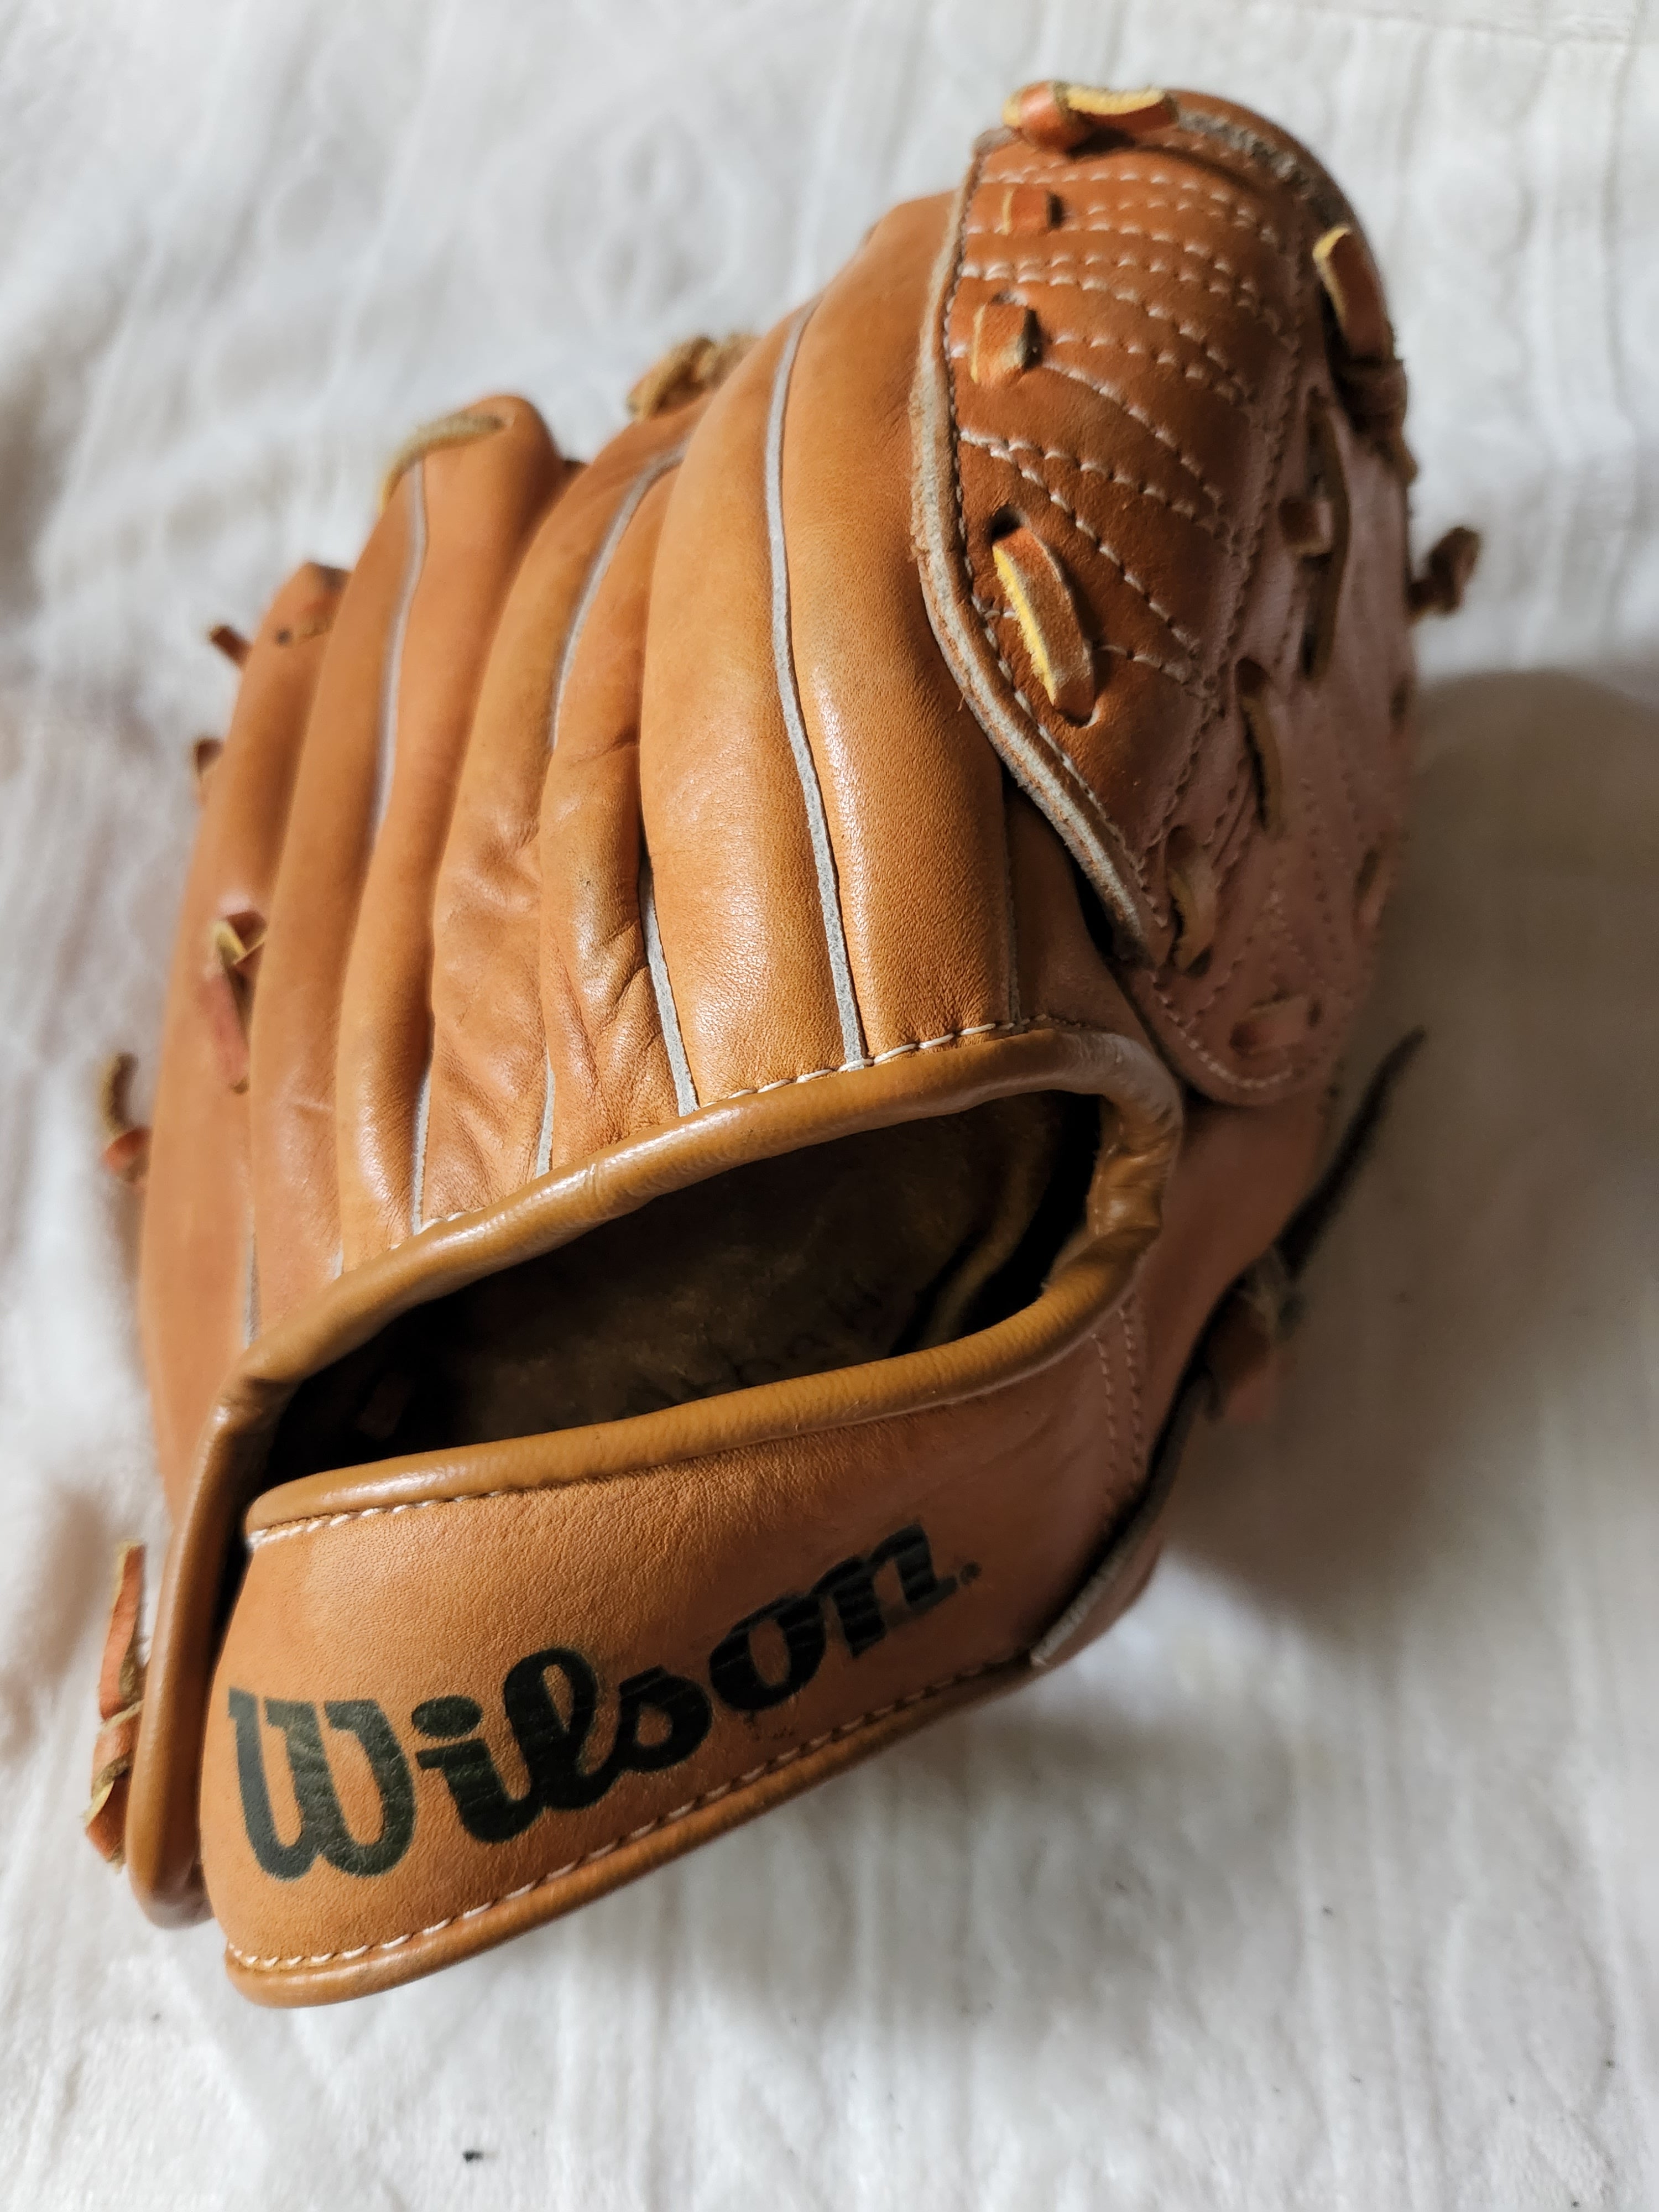 Right Hand Throw Black/Wilson Gold Wilson A360 Baseball Glove 10" 